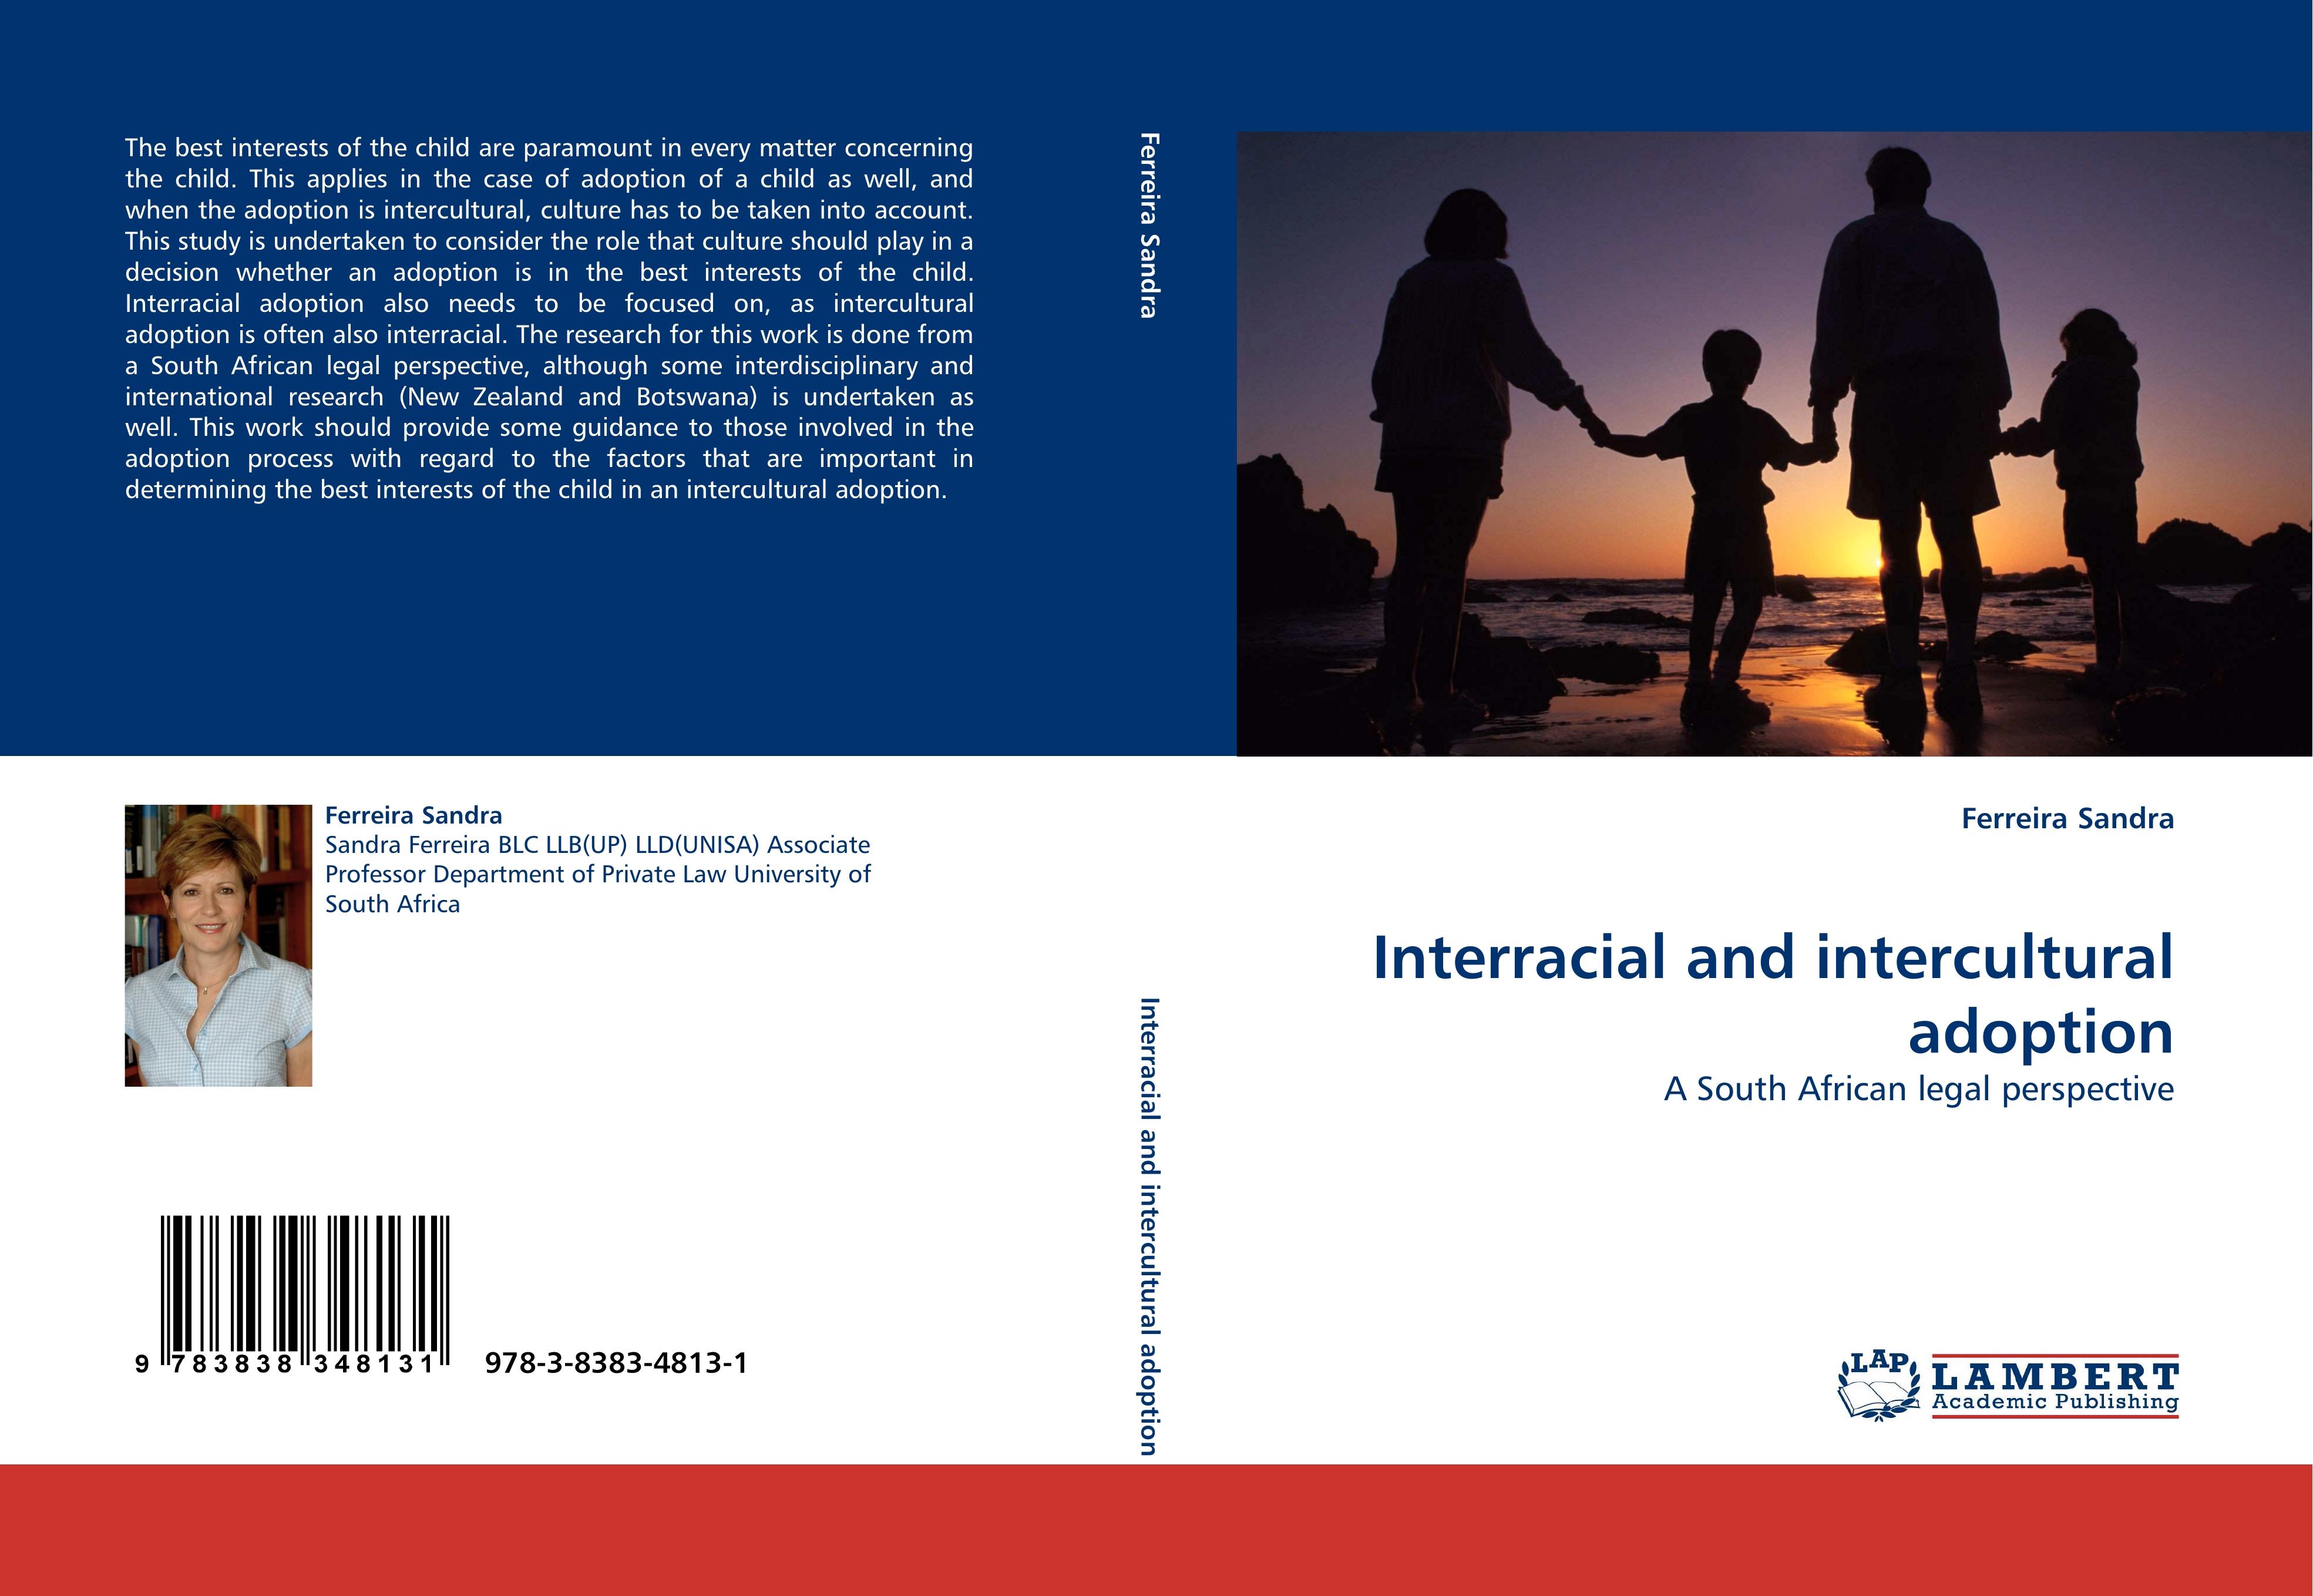 Interracial and intercultural adoption / A South African legal perspective / Ferreira Sandra / Taschenbuch / Paperback / 388 S. / Englisch / 2010 / LAP LAMBERT Academic Publishing / EAN 9783838348131 - Sandra, Ferreira